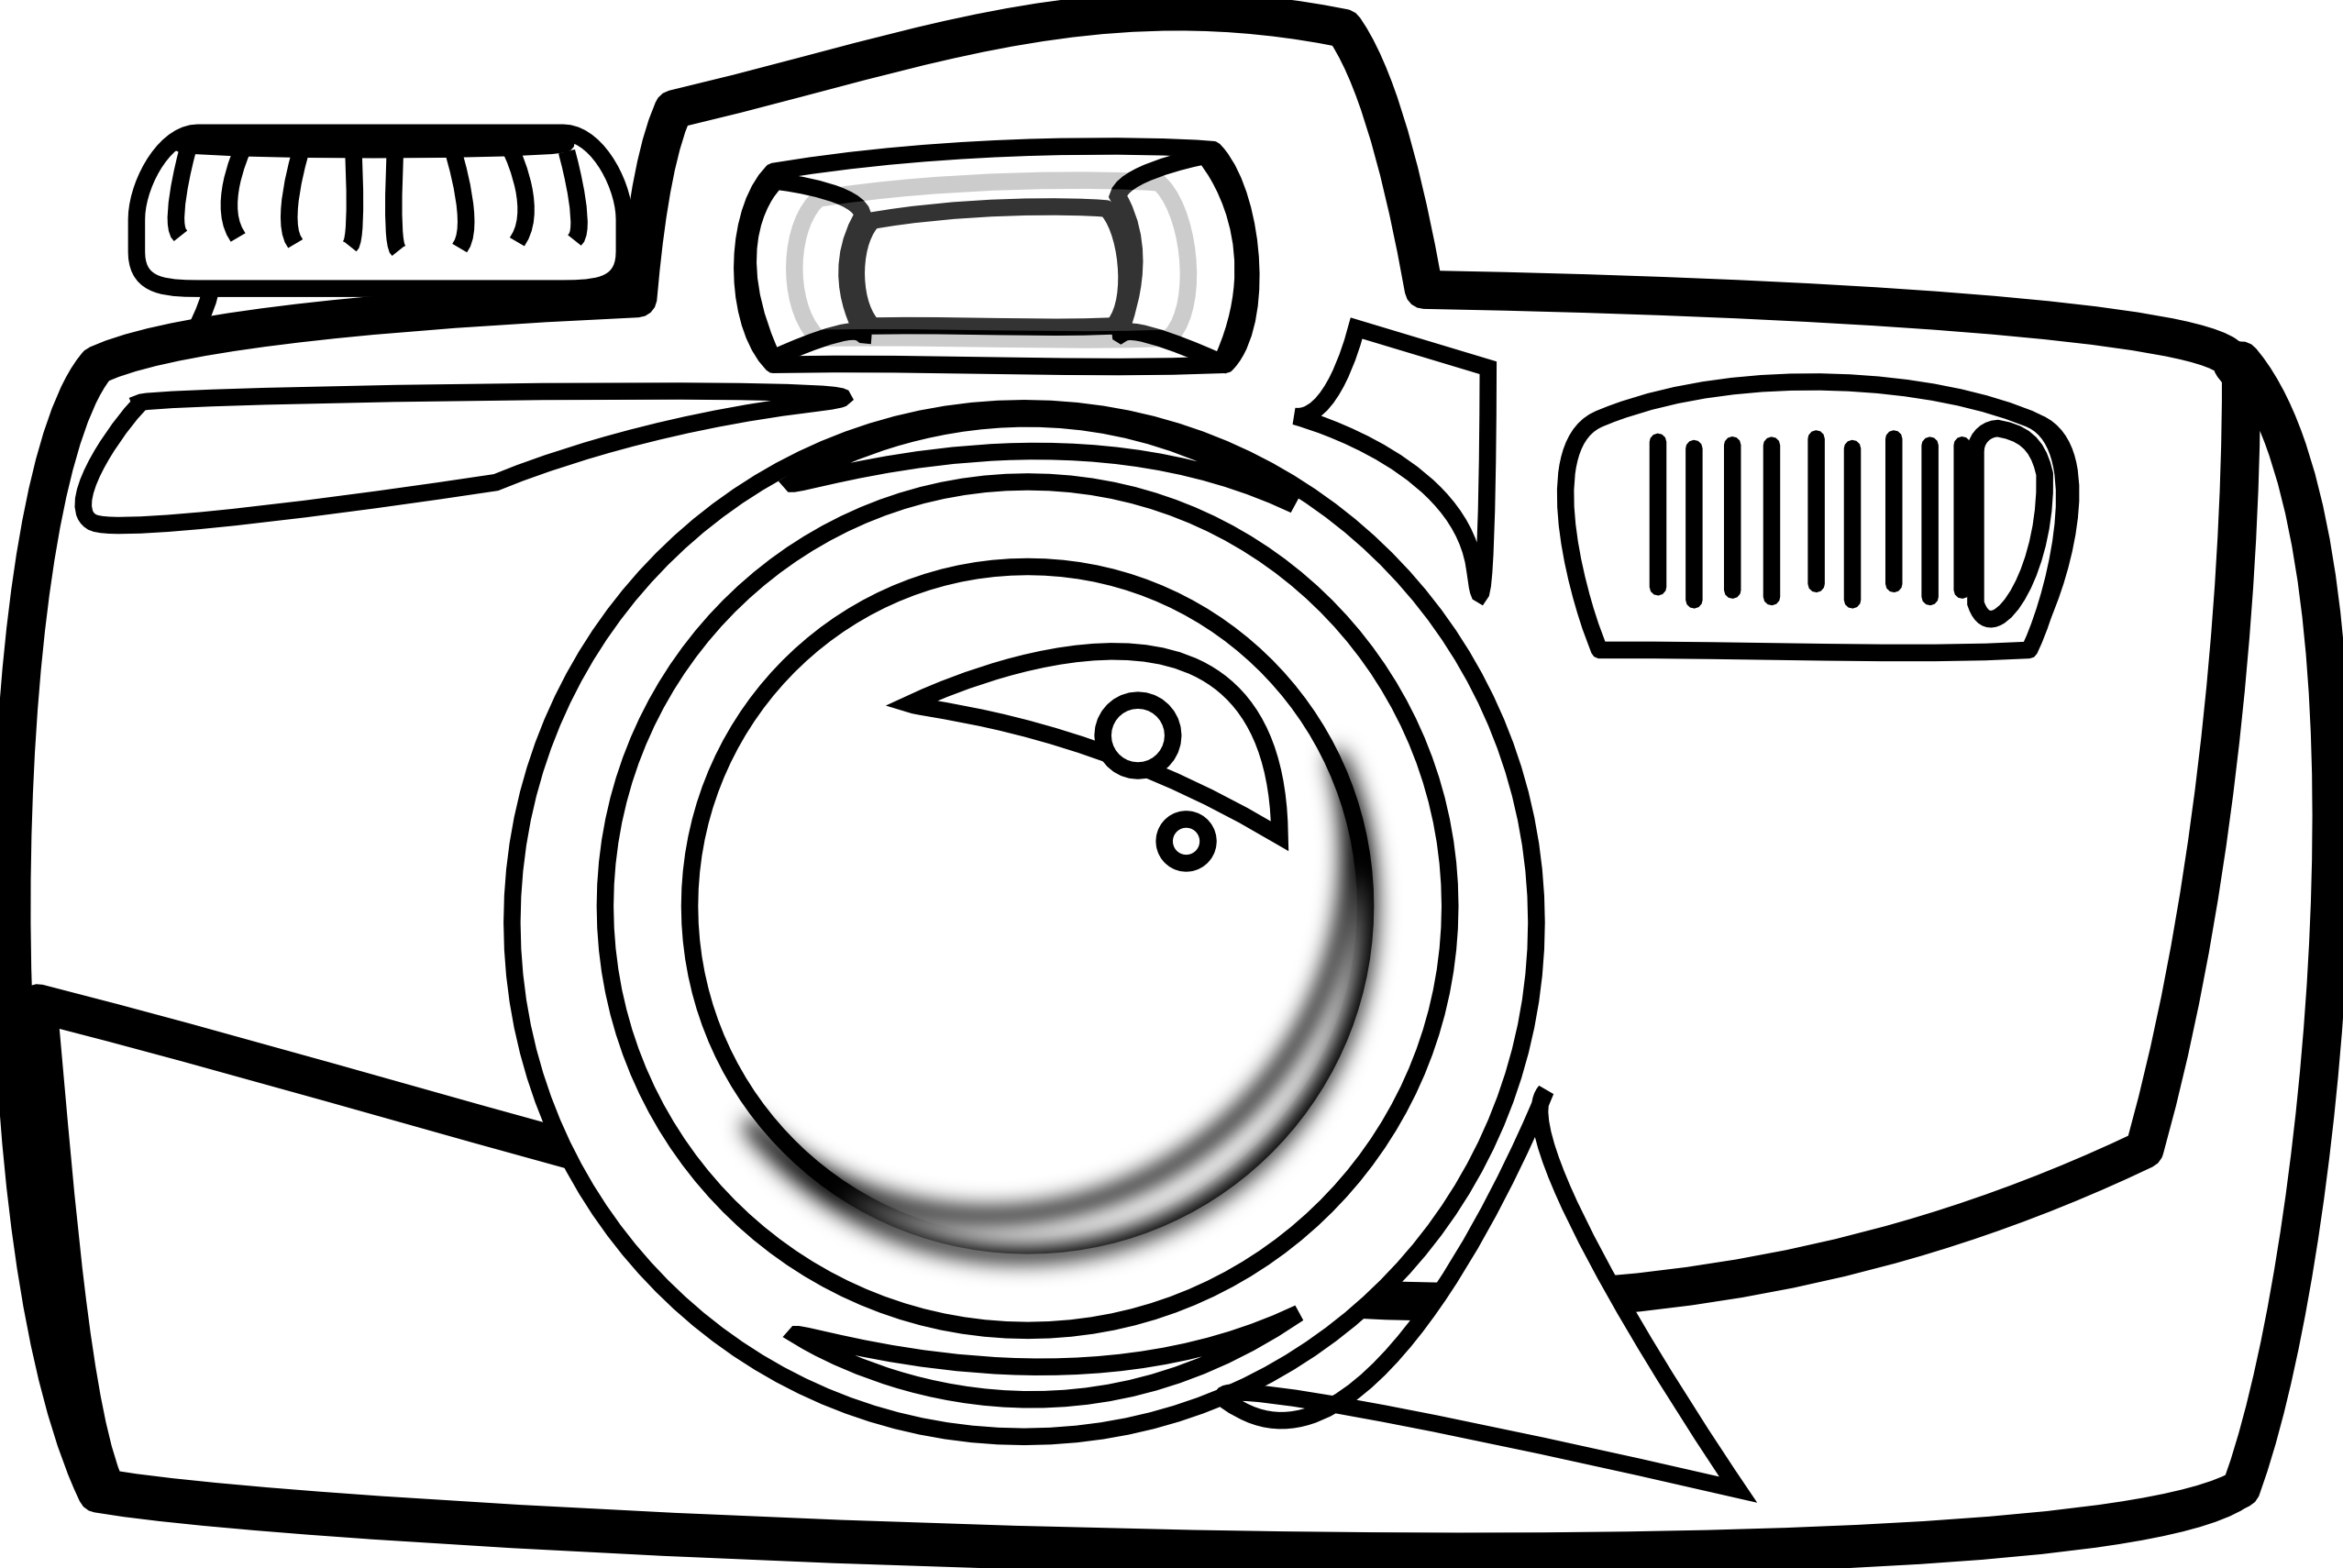 Free Cartoon Camera Transparent, Download Free Cartoon Camera